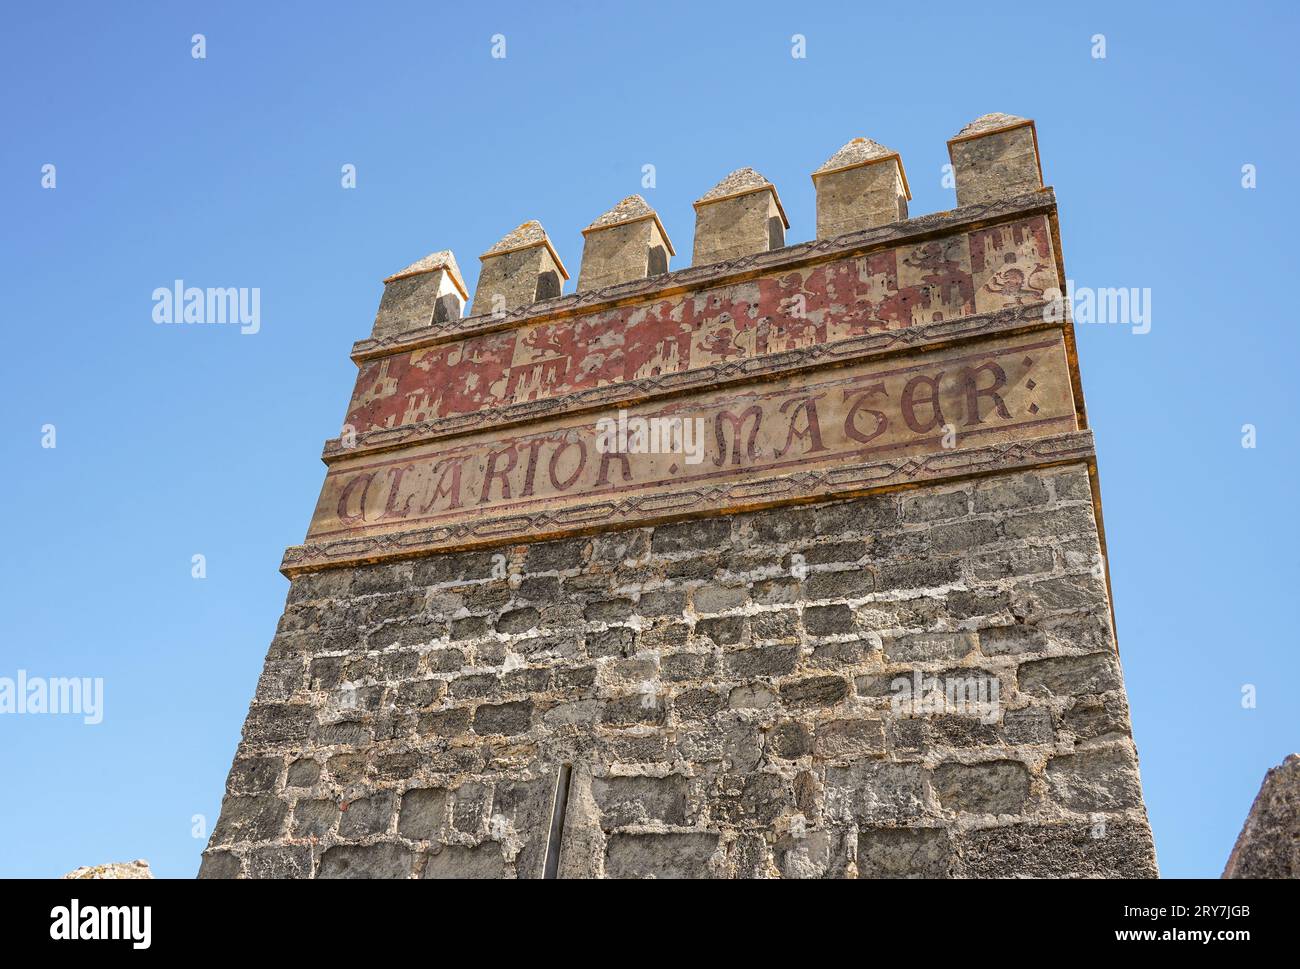 Turm der Burg von San Marcos, Turm, El Puerto de Santa María, Festung aus dem 13. Jahrhundert, Cadiz, Andalusien, Spanien. Stockfoto